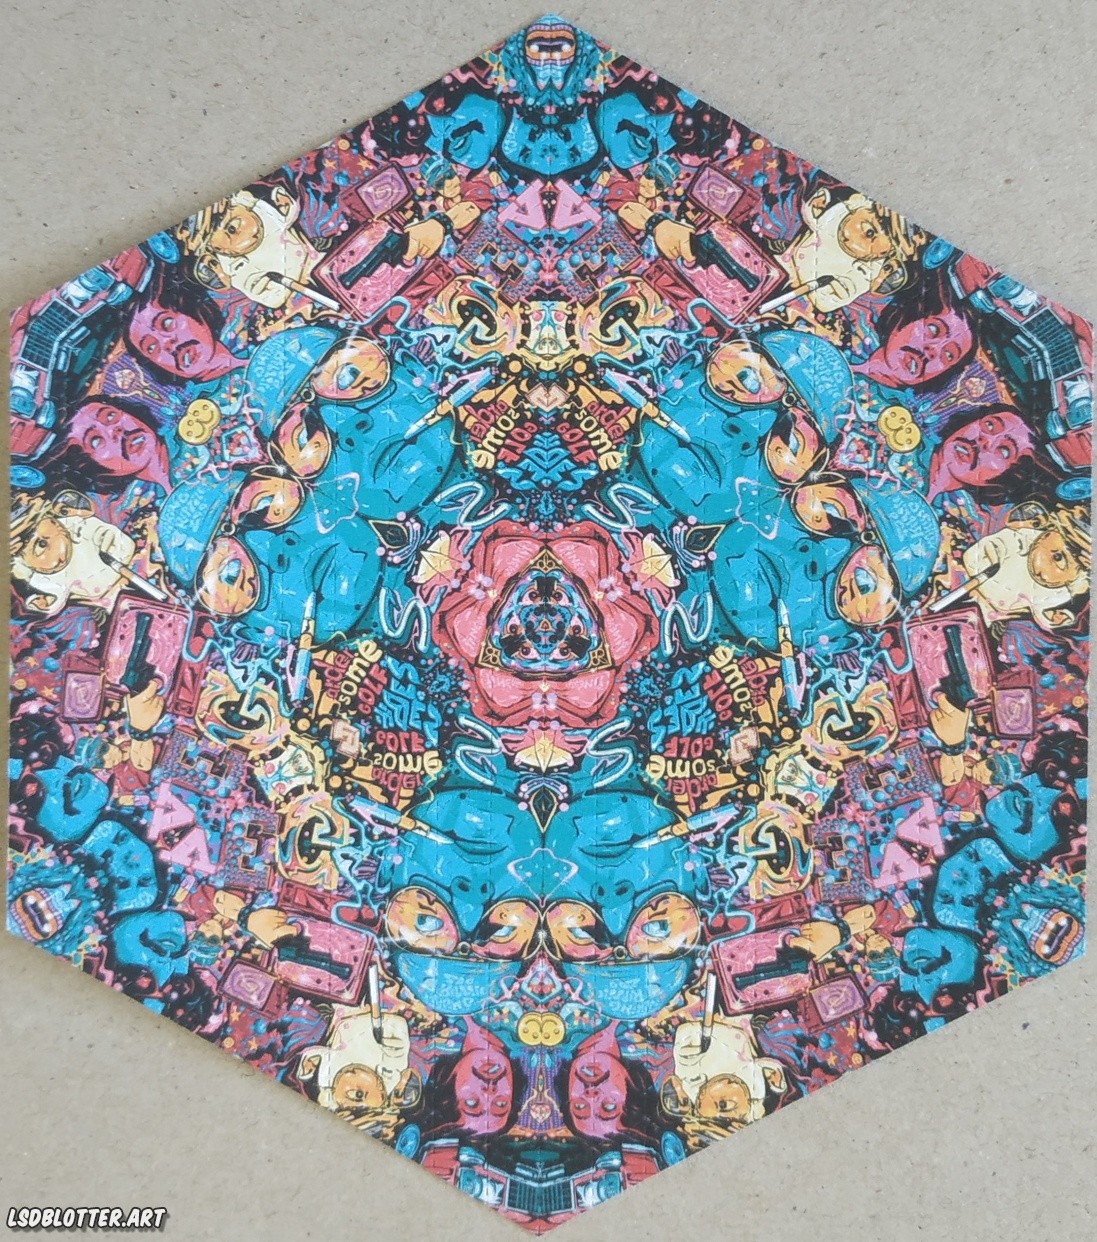 HEXAGON A HOFMANN ॐ blotter art psychedelic goa acid artwork ॐ / 